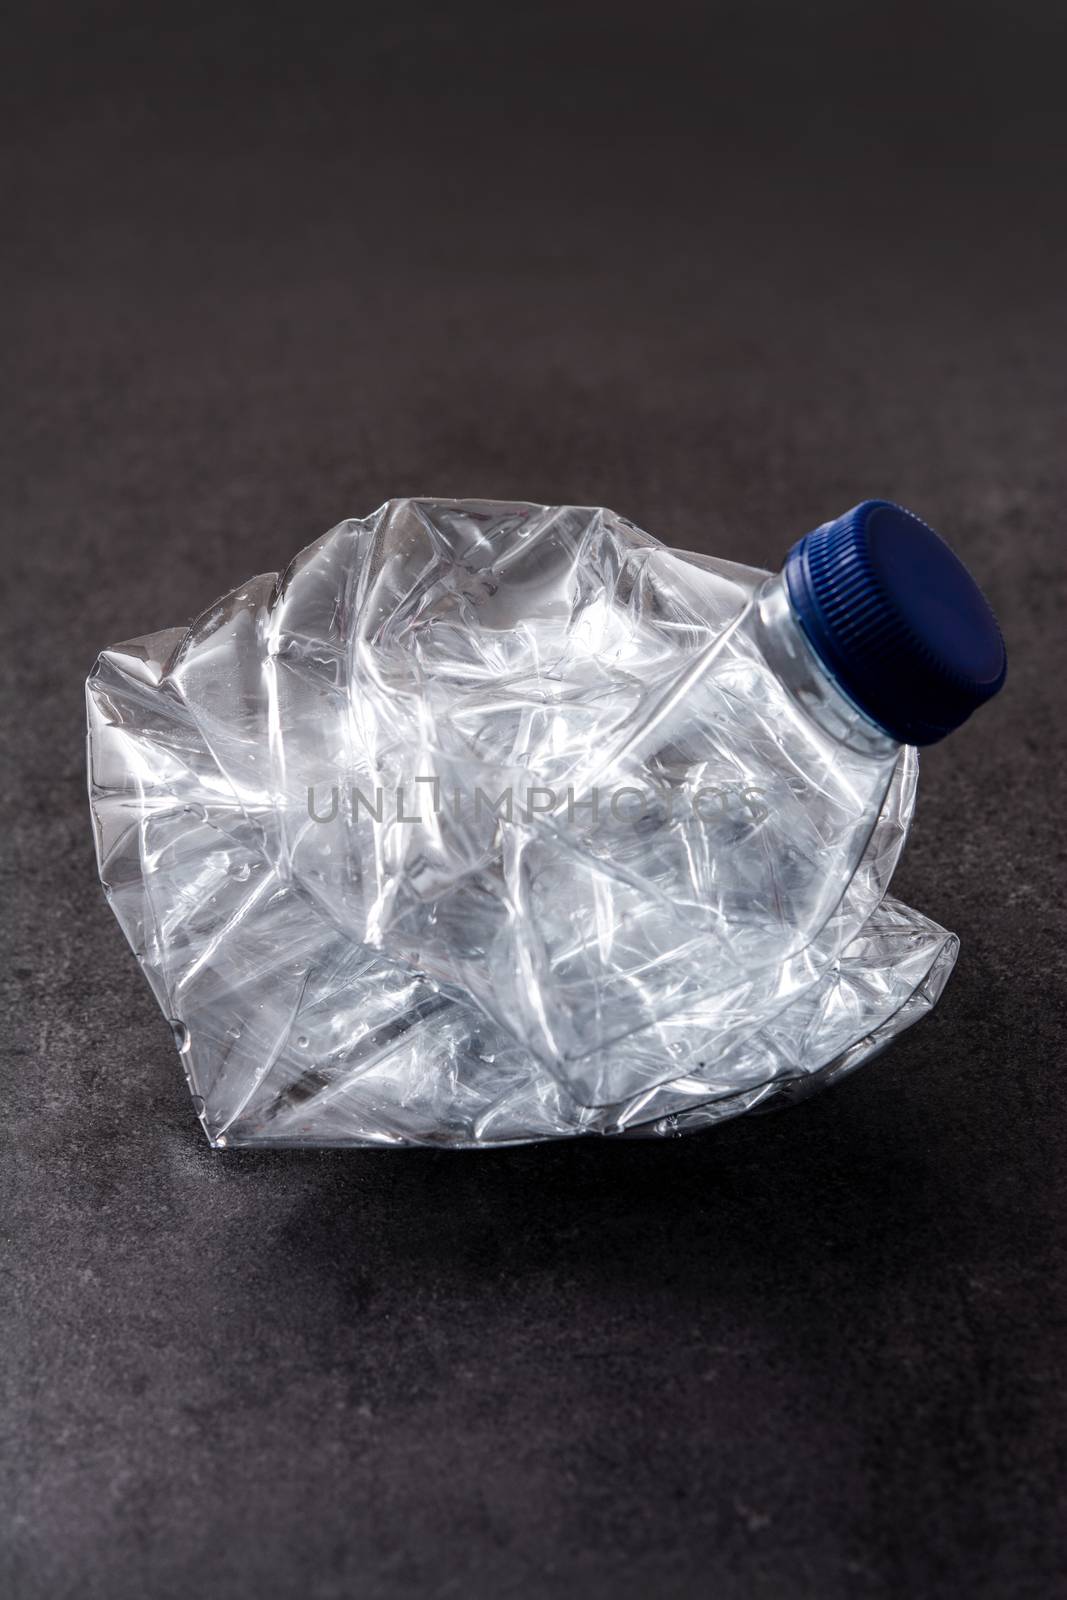 Disposable waste plastic bottle on black background